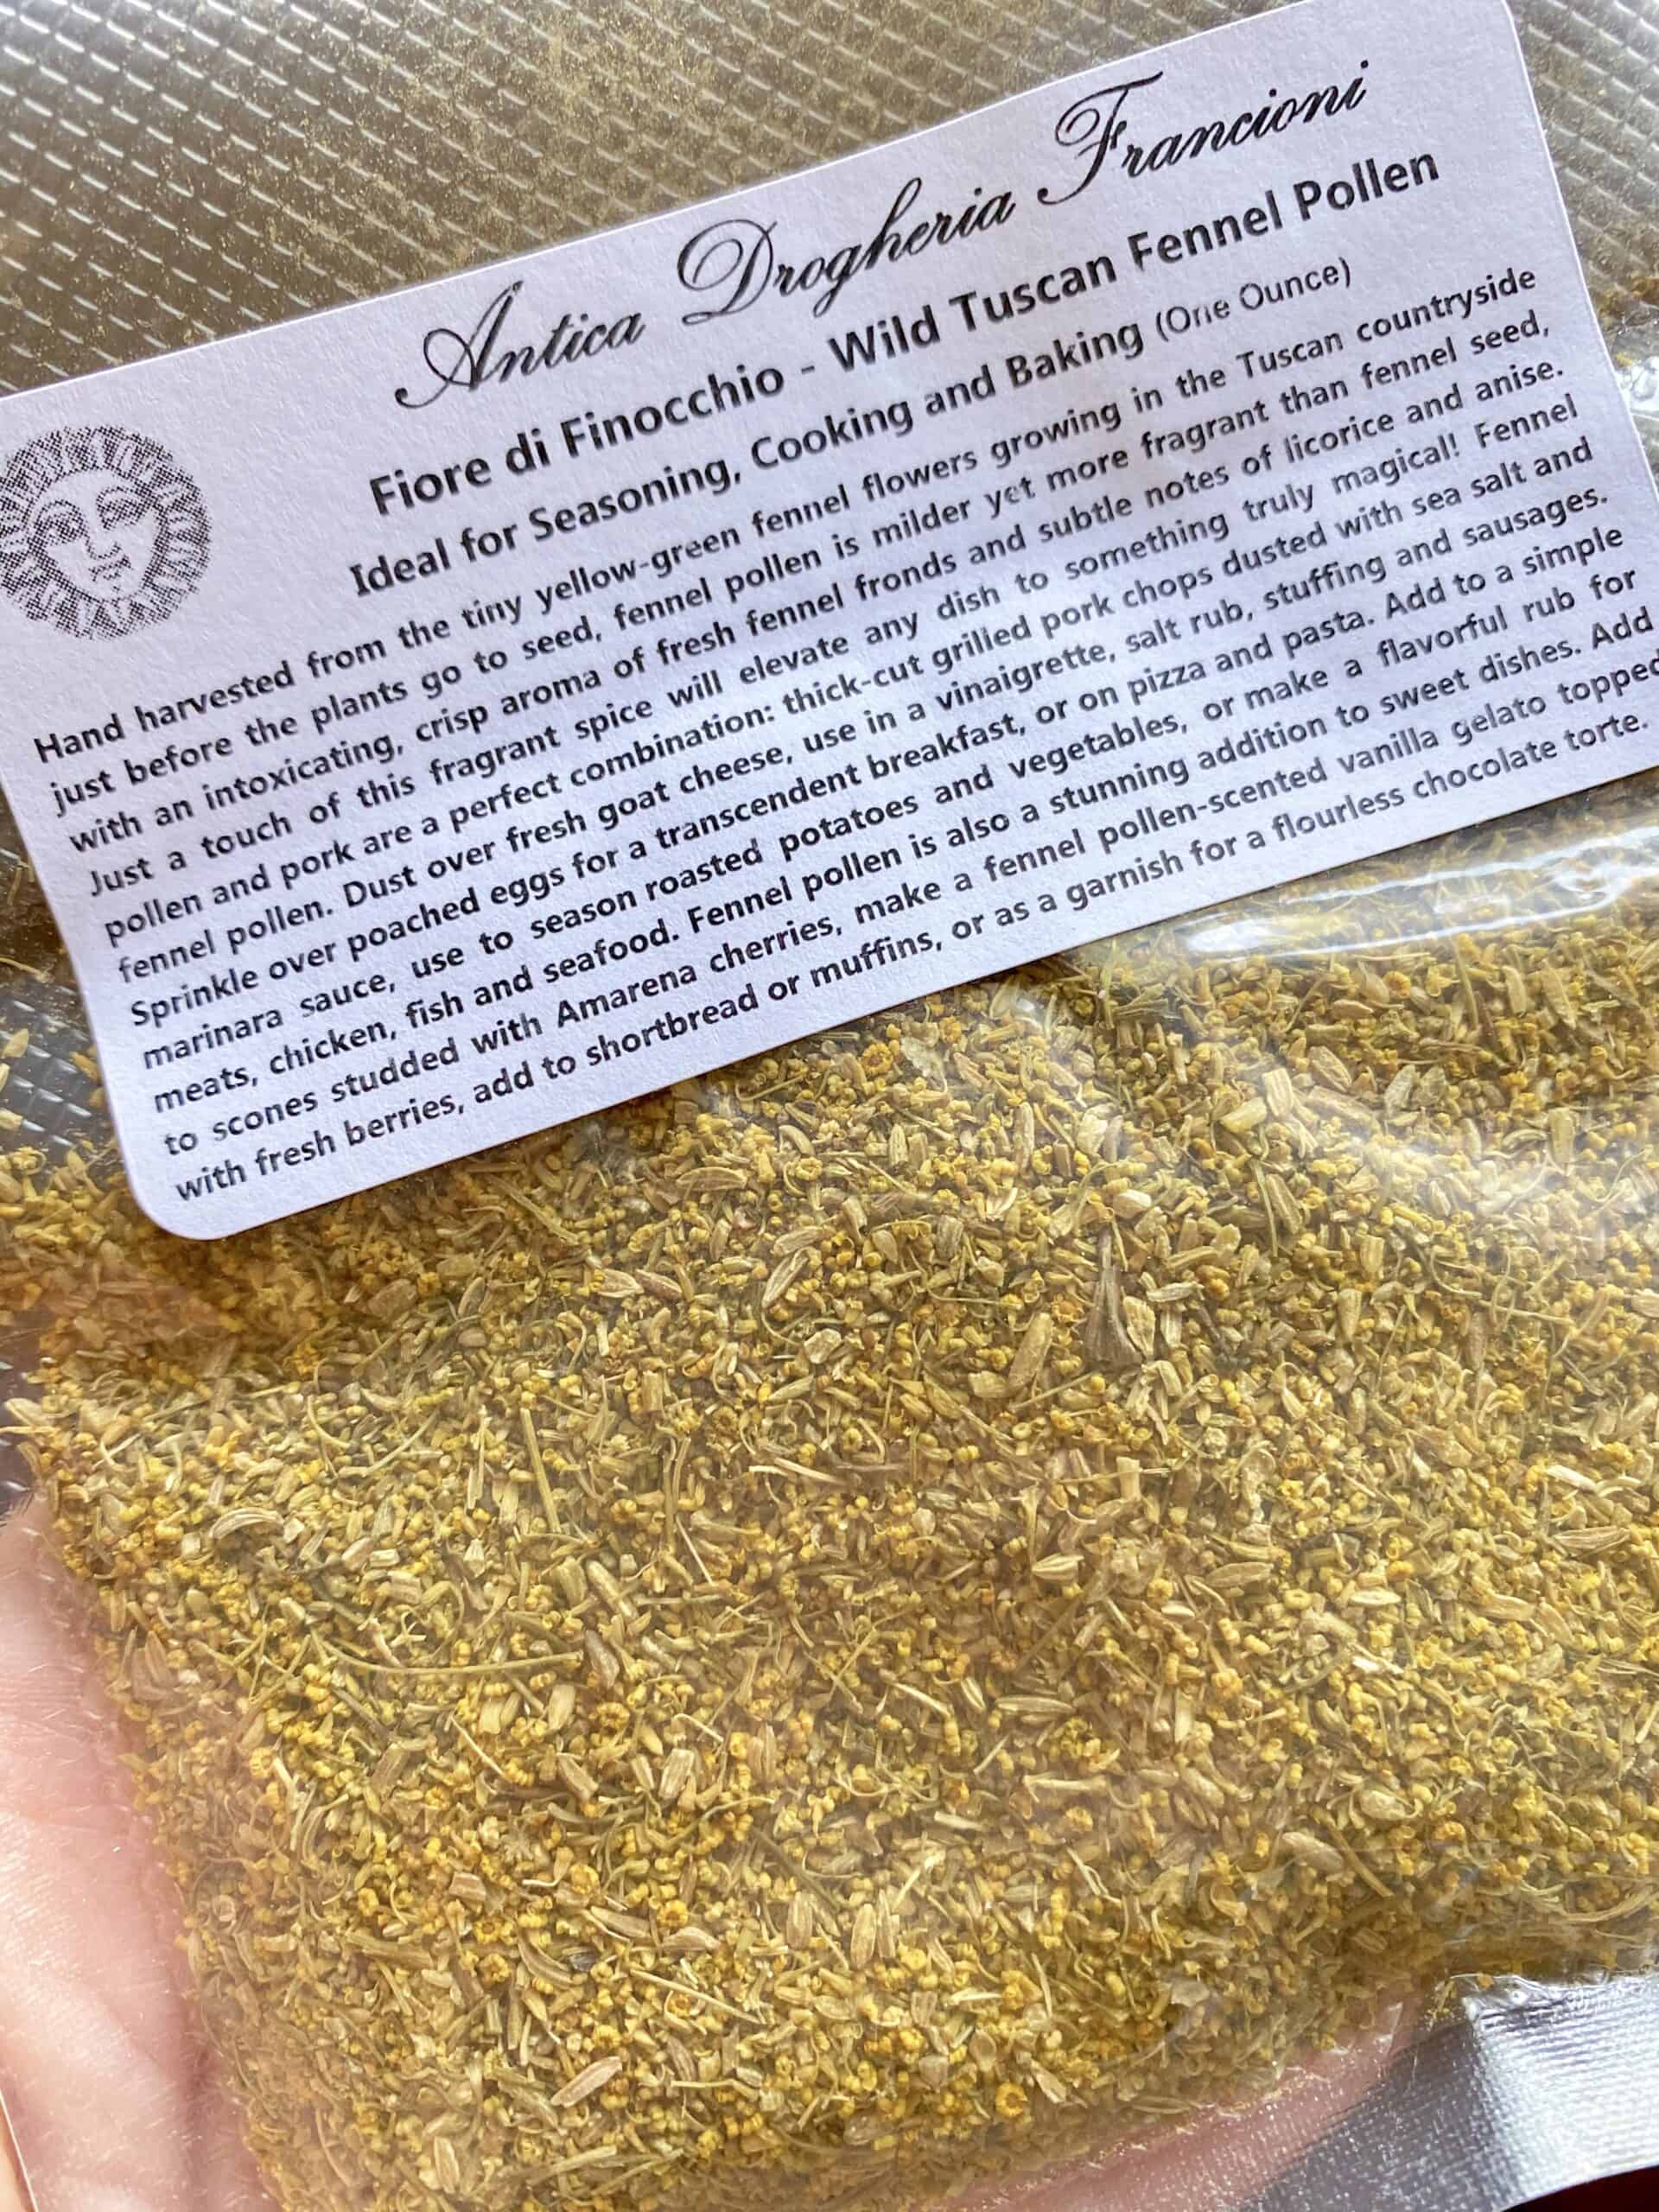 bag of fennel pollen